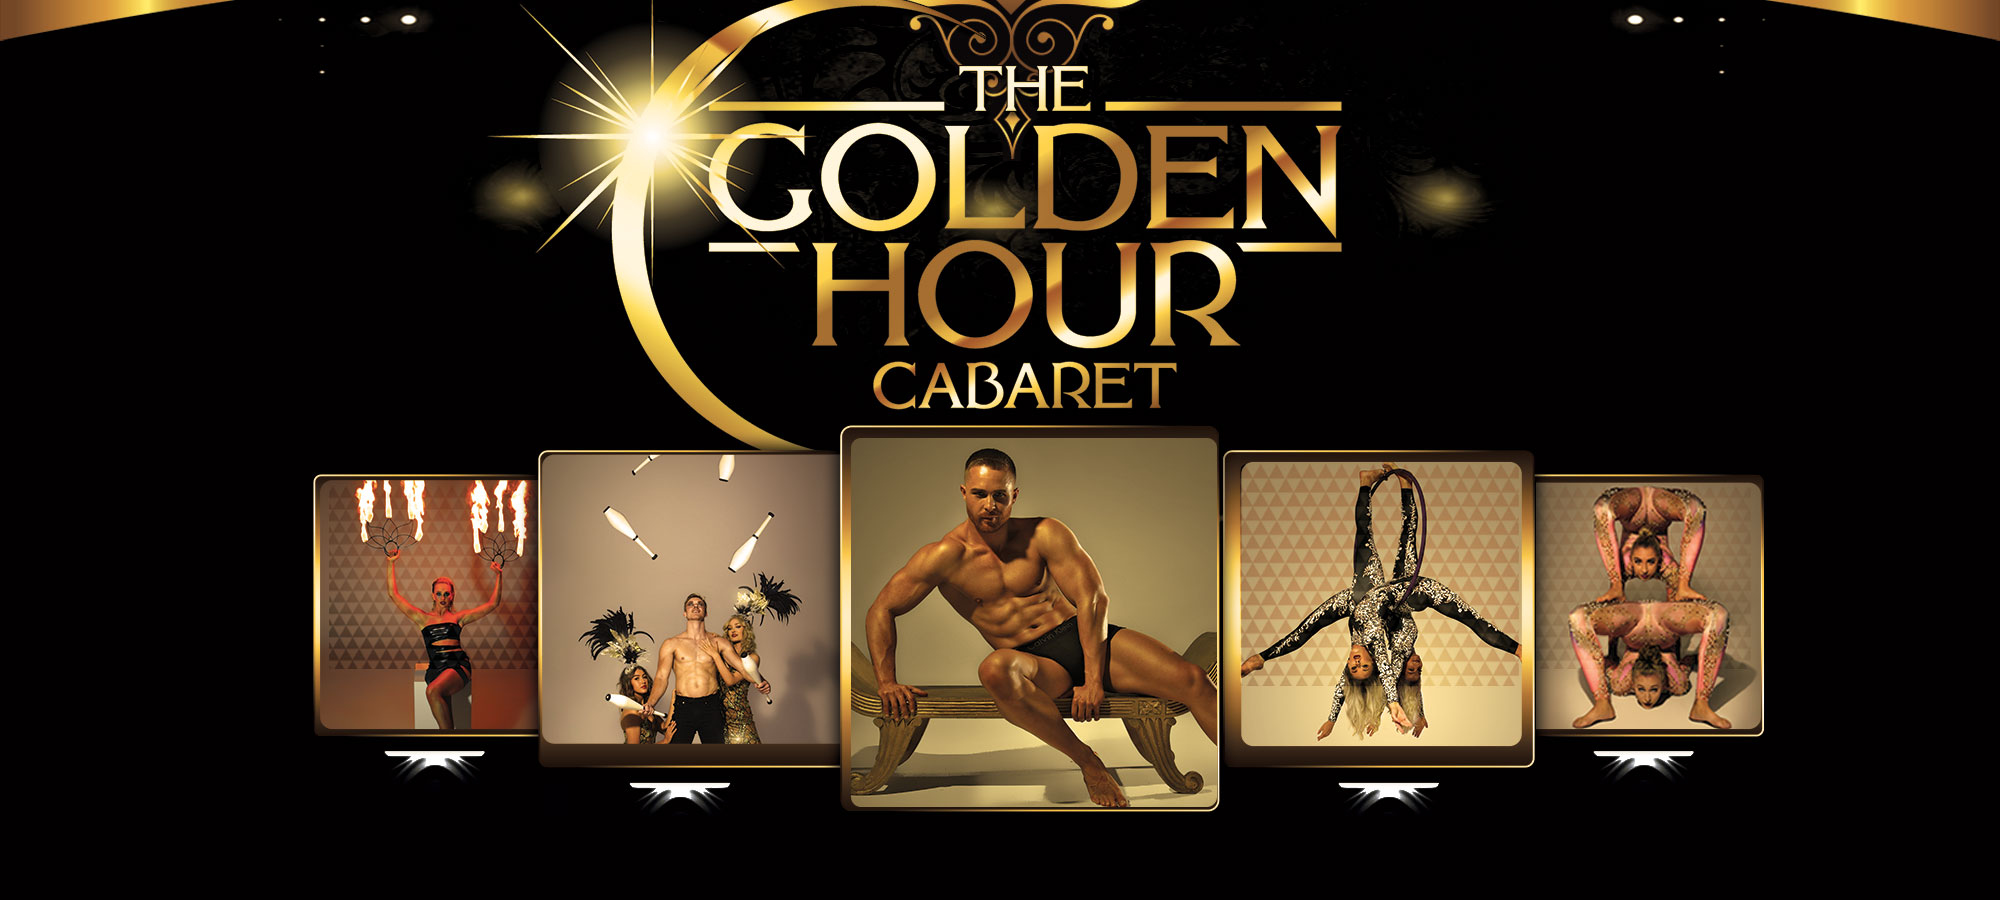 The Golden Hour Cabaret